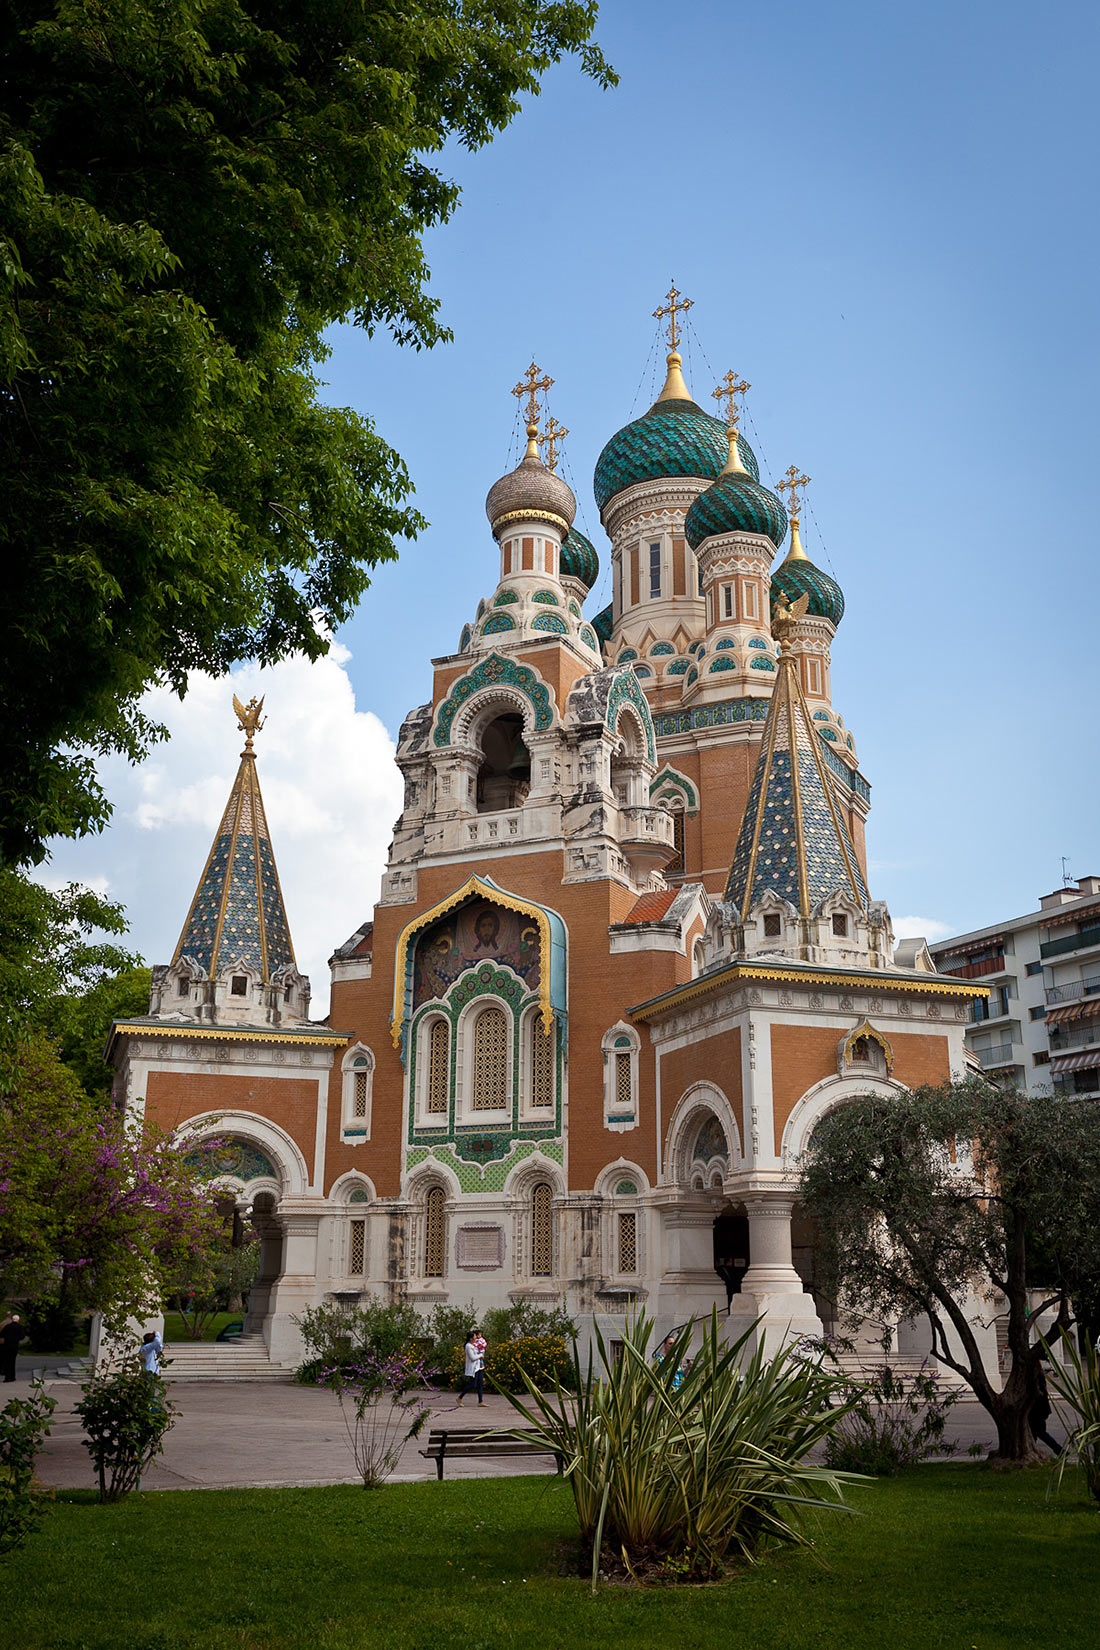 St Nicholas Orthodox Cathedral